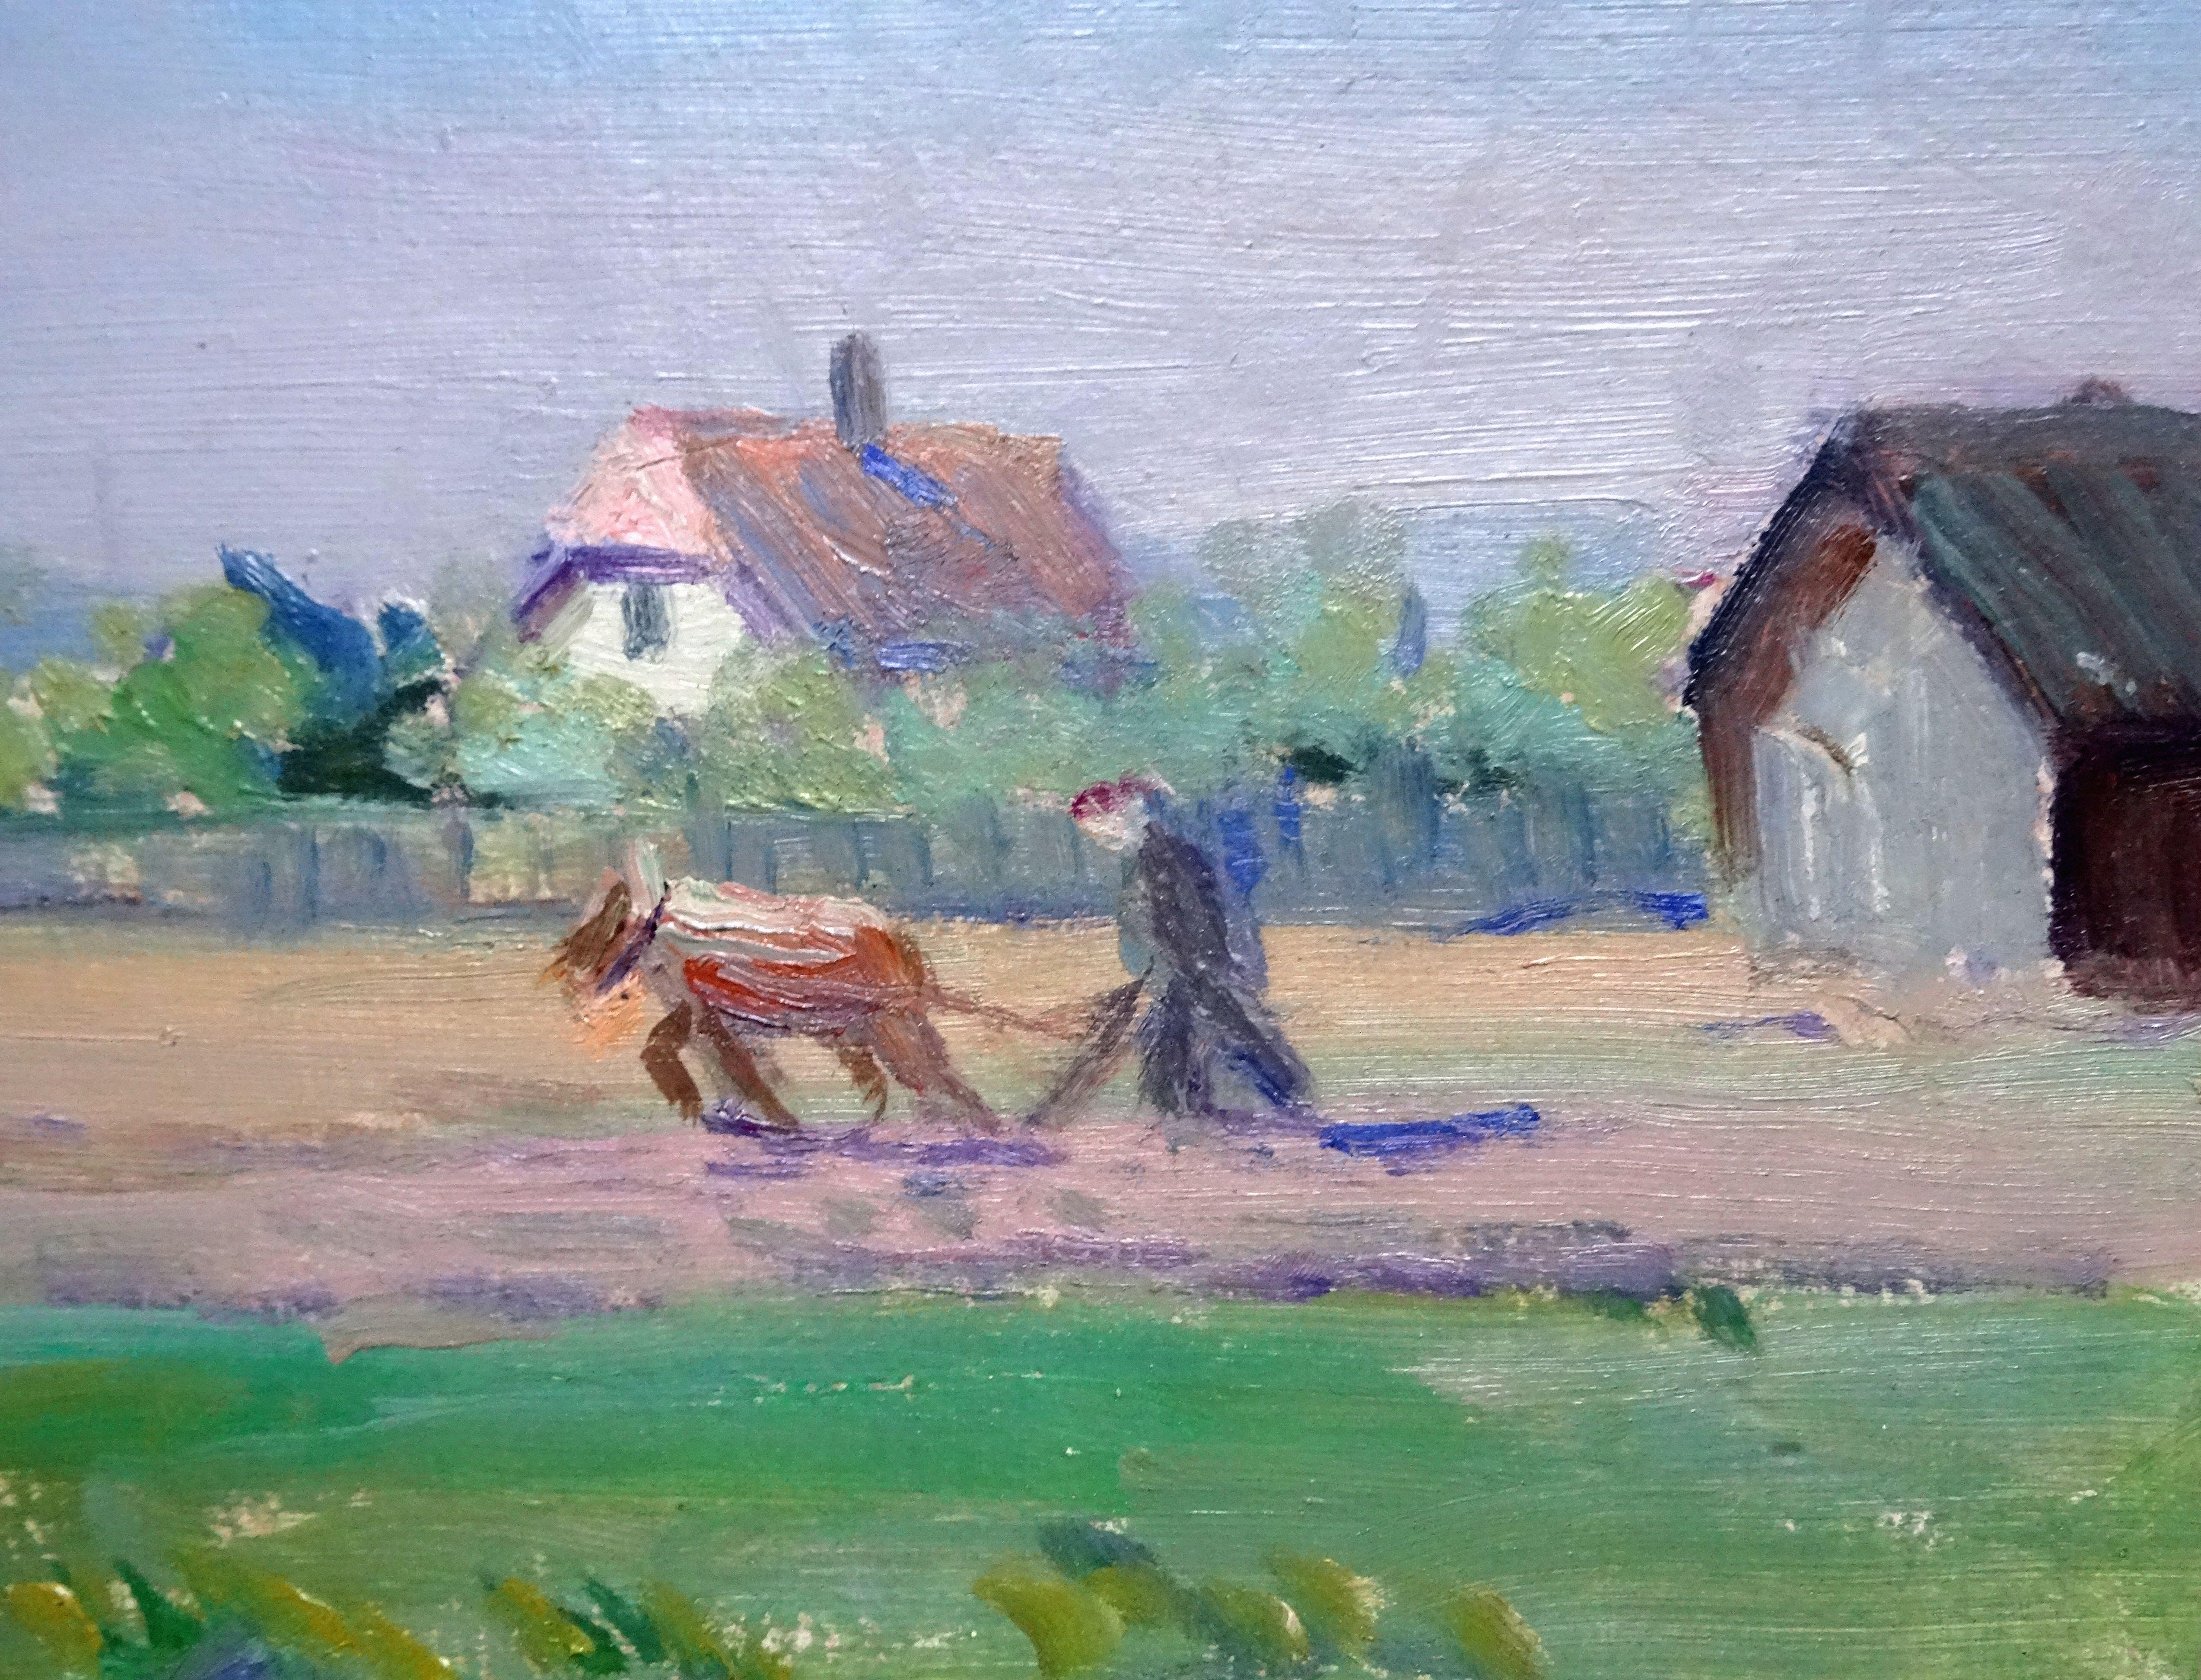 Work in the village. Oil on cardboard, 20x32 cm - Painting by Peteris Rungis 